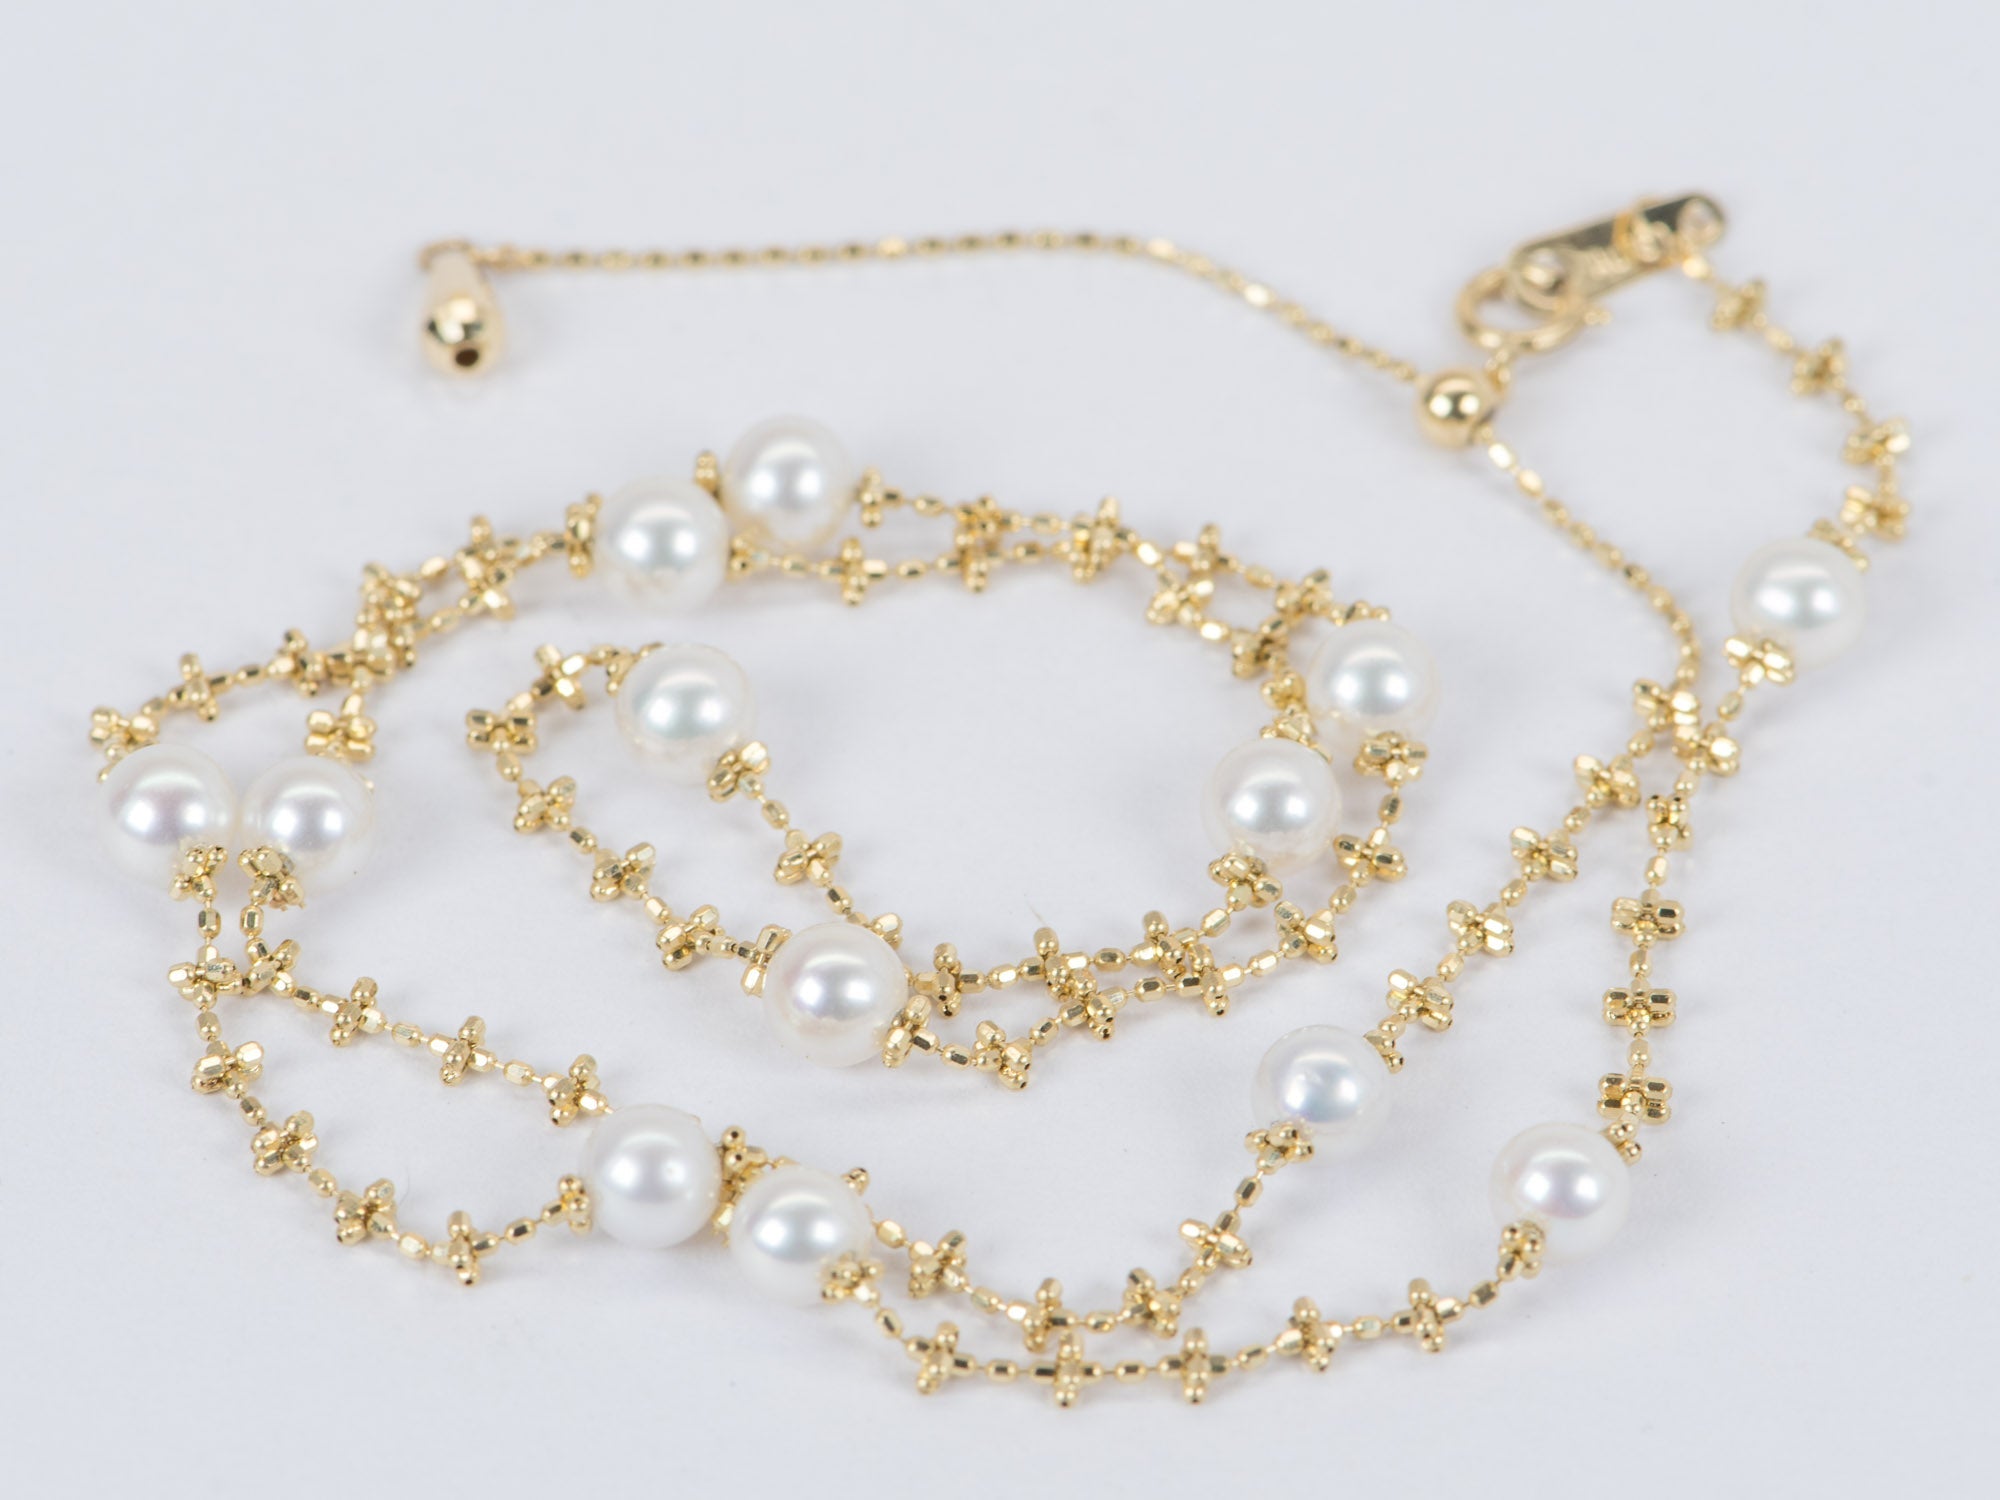 4mm Diamond White June Gold Necklace Pendant 18K Designer Full Pearl Akoya - Accents Aurora Pearl AD2278 Round